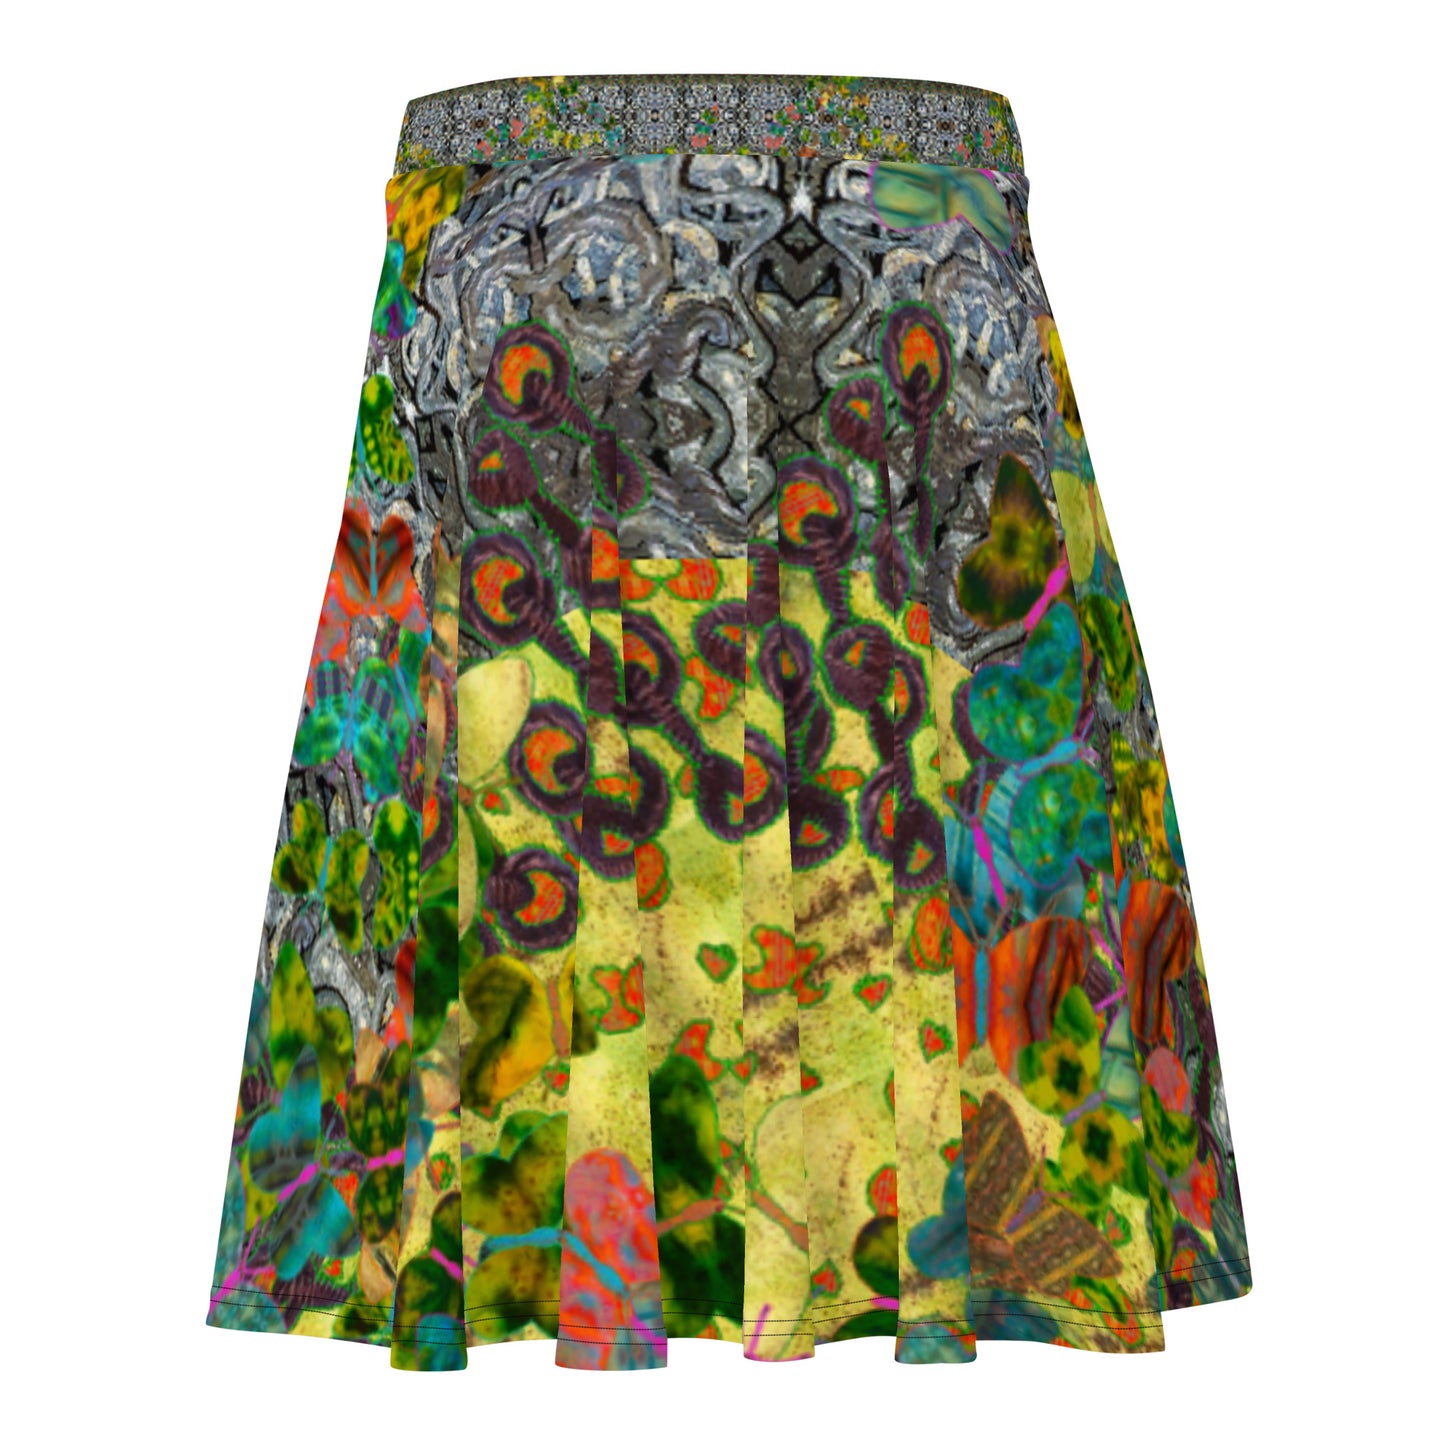 Skater Skirt (Her/They)(Butterfly Glade Shoal Solstice GNHV 8.2) RJSTH@Fabric#2 RJSTHw2021 RJS